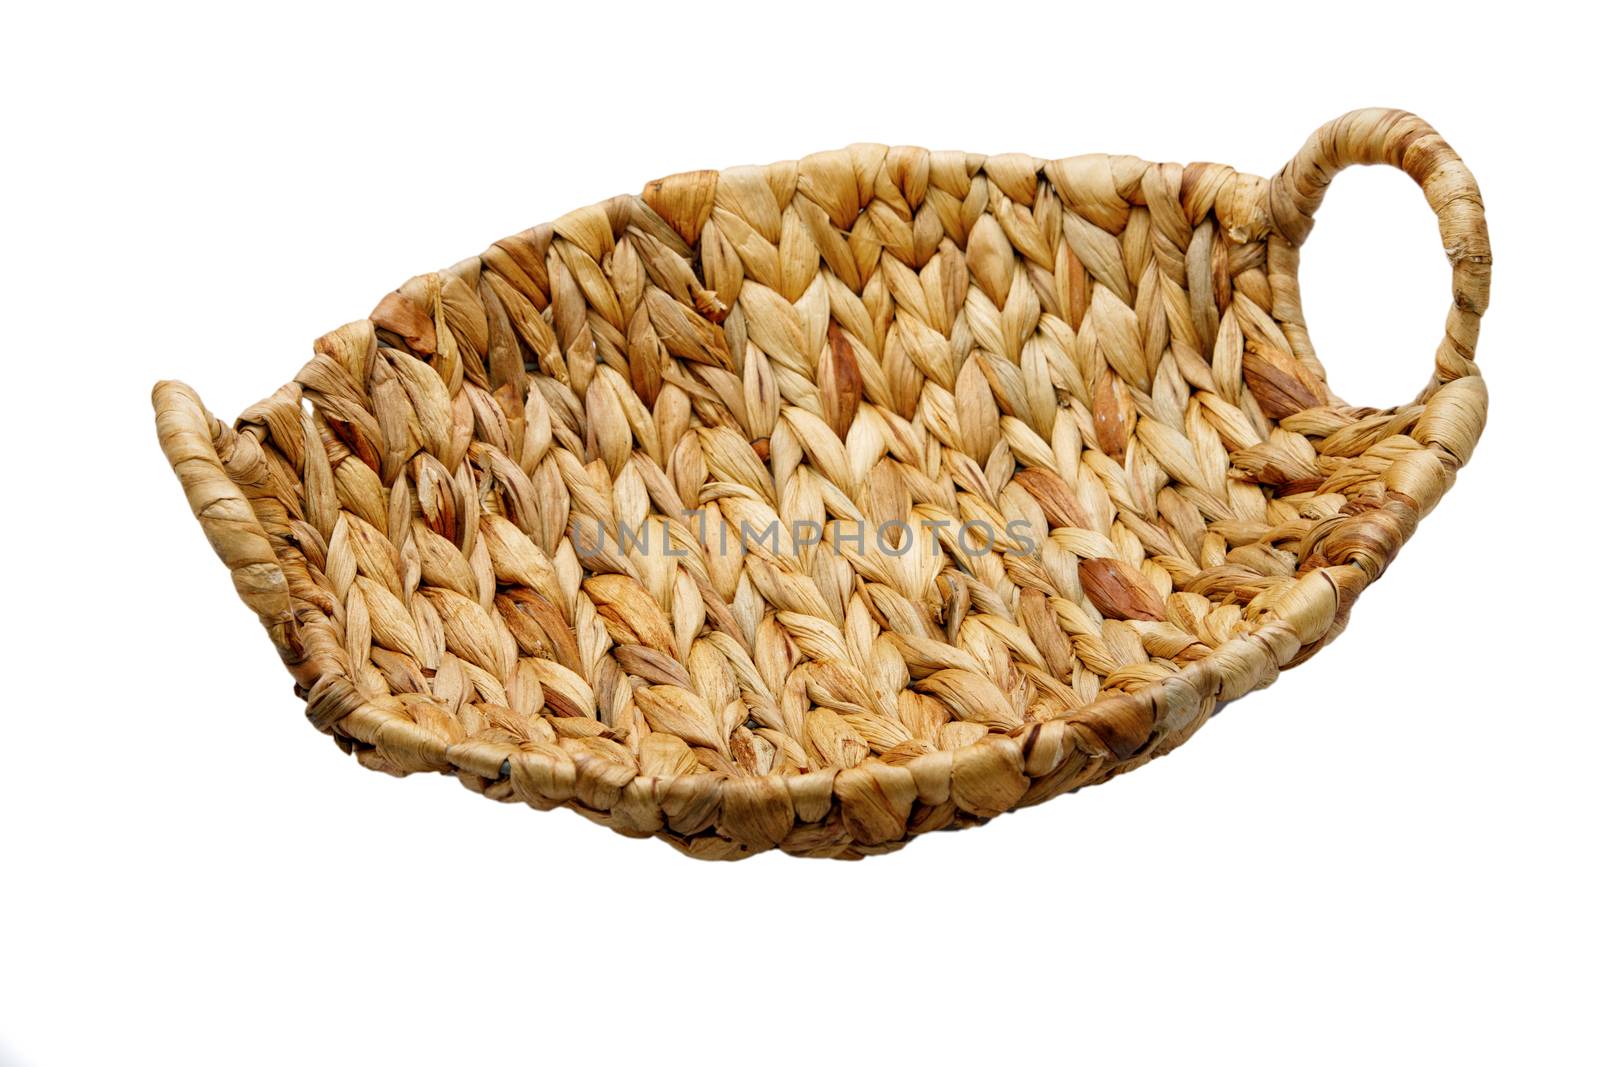 Wattled basket isolated on a white background